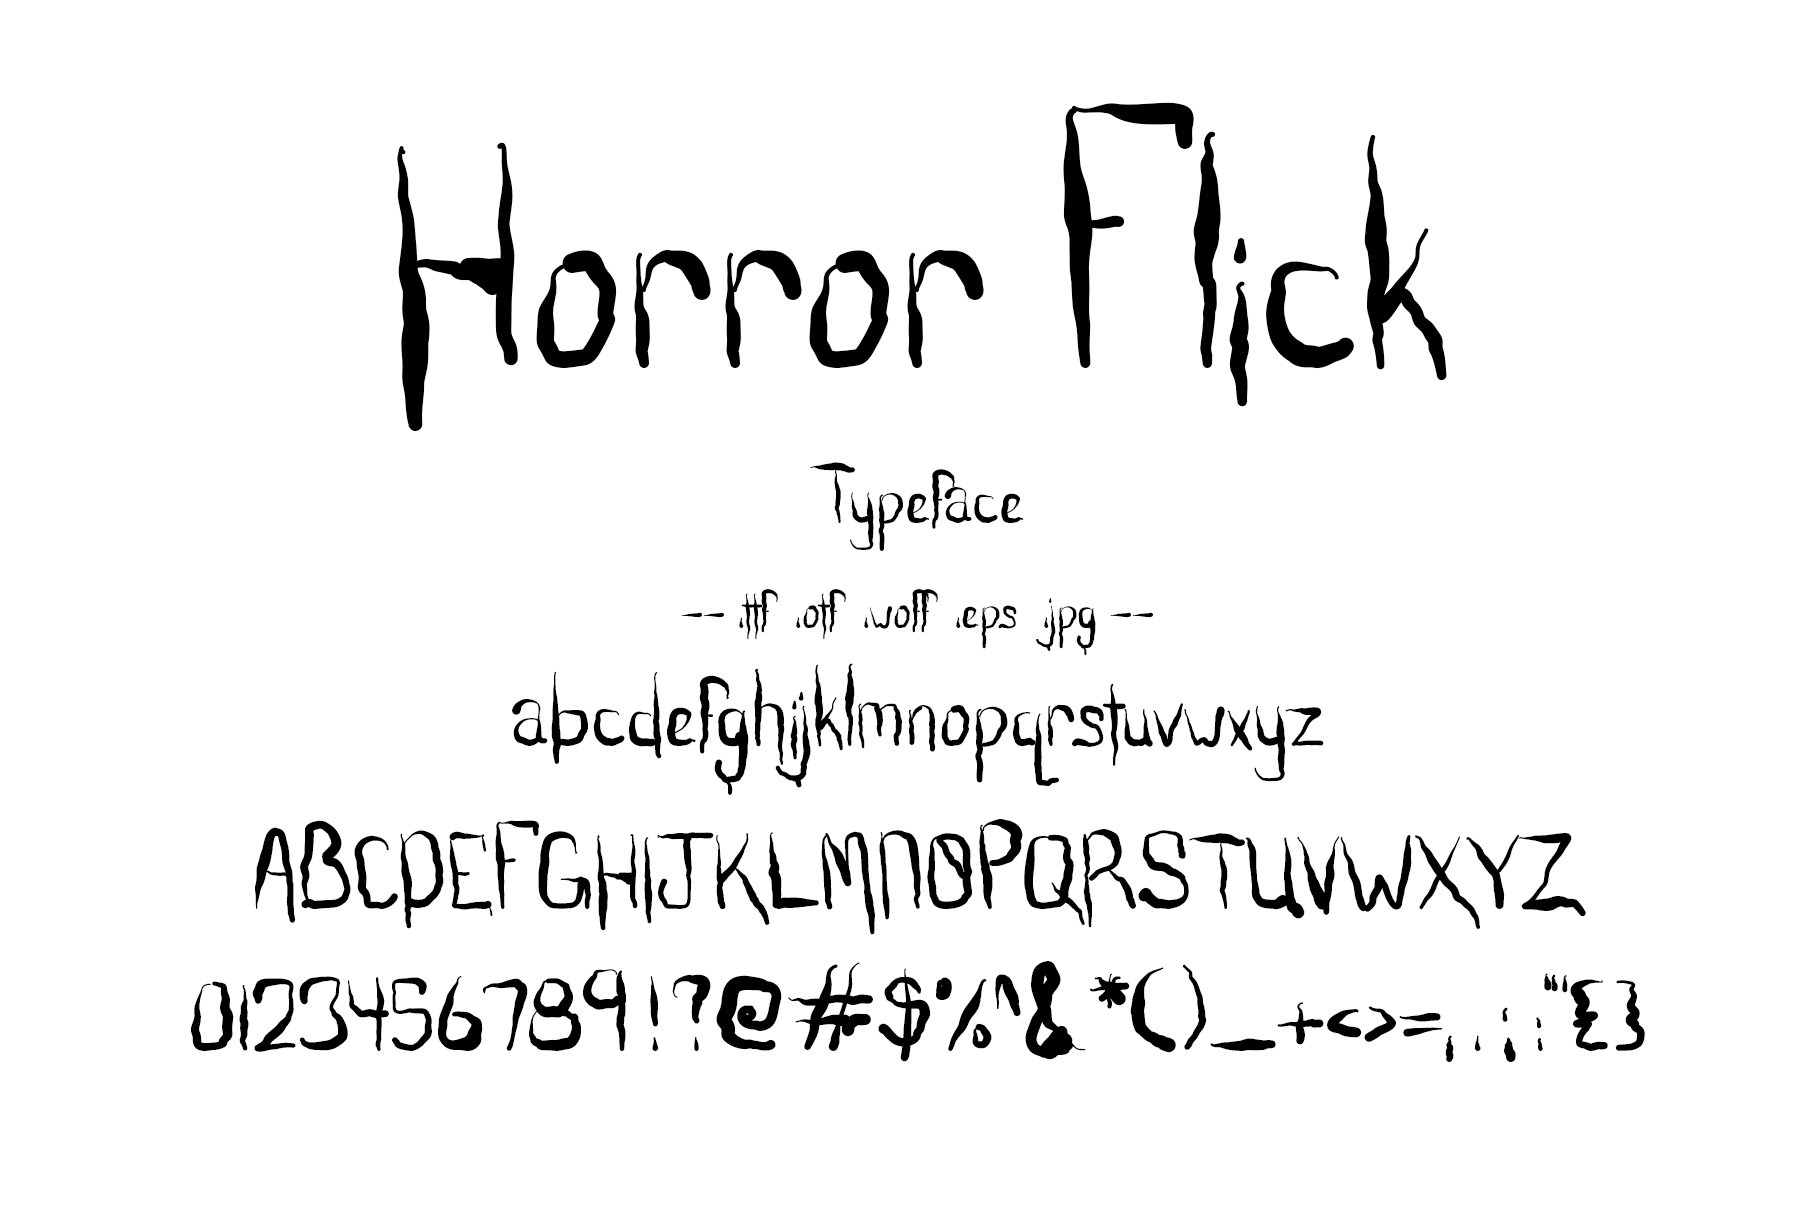 Font Horror Flick Creepy Halloween cover image.